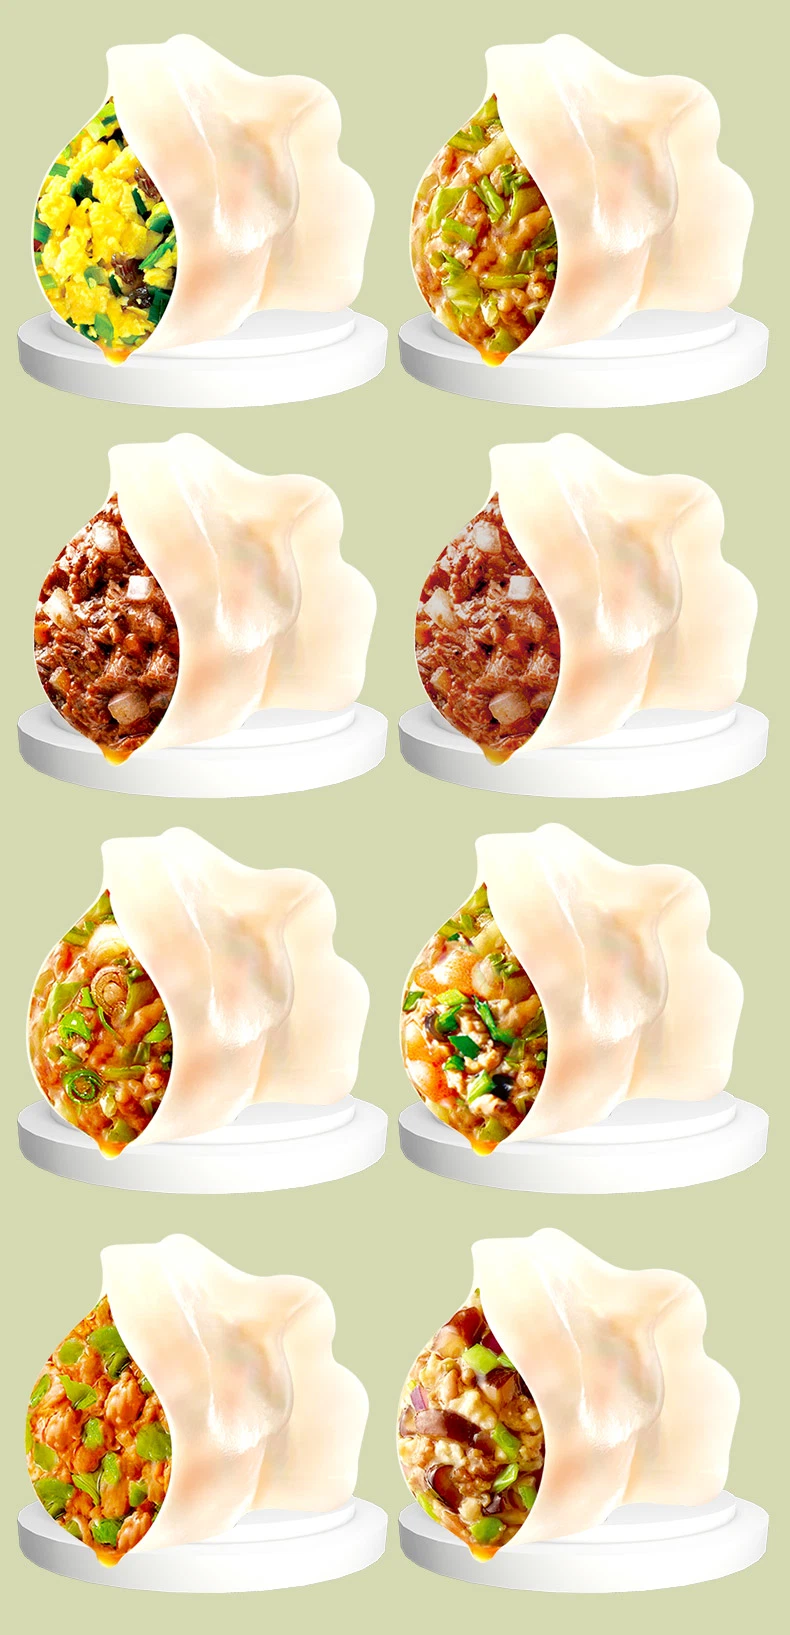 Wheatsun 400g Dumplings Chinese Spring Festival Dumplings Frozen Semi-Finished Products Beef and Green Onion Filling